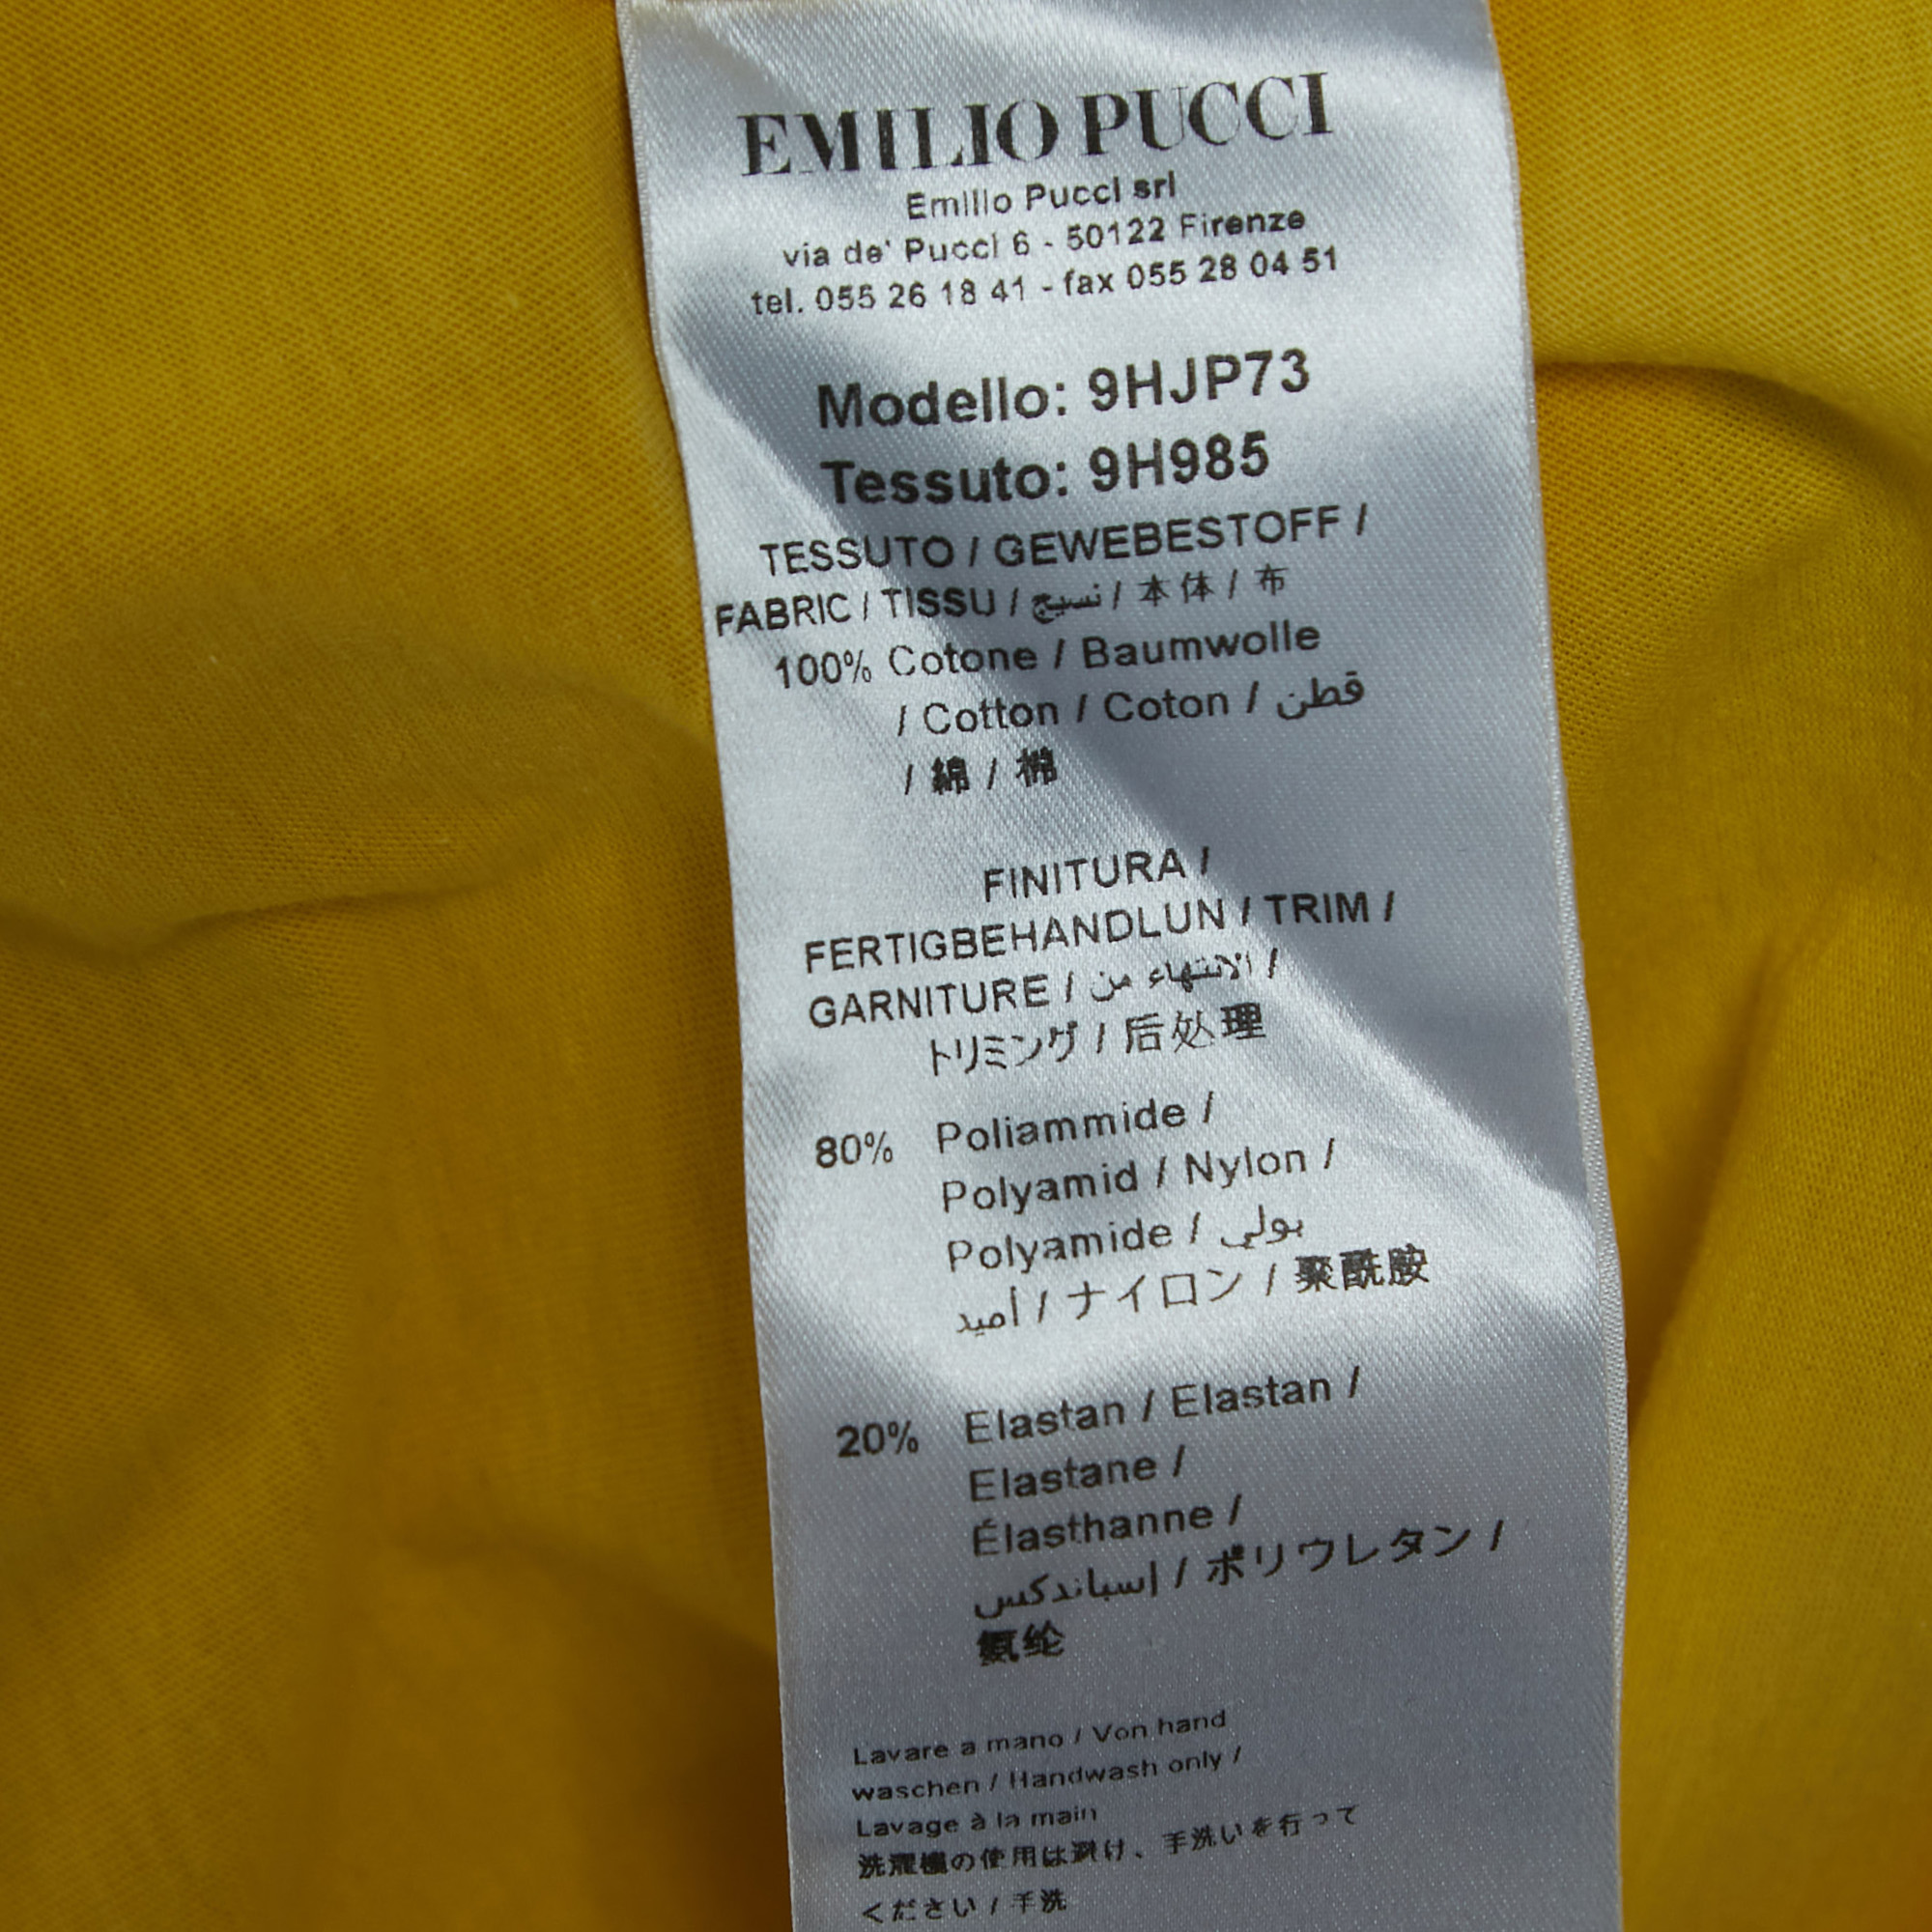 Emilio Pucci Yellow Logo Patch Cotton Short Sleeve T-Shirt S